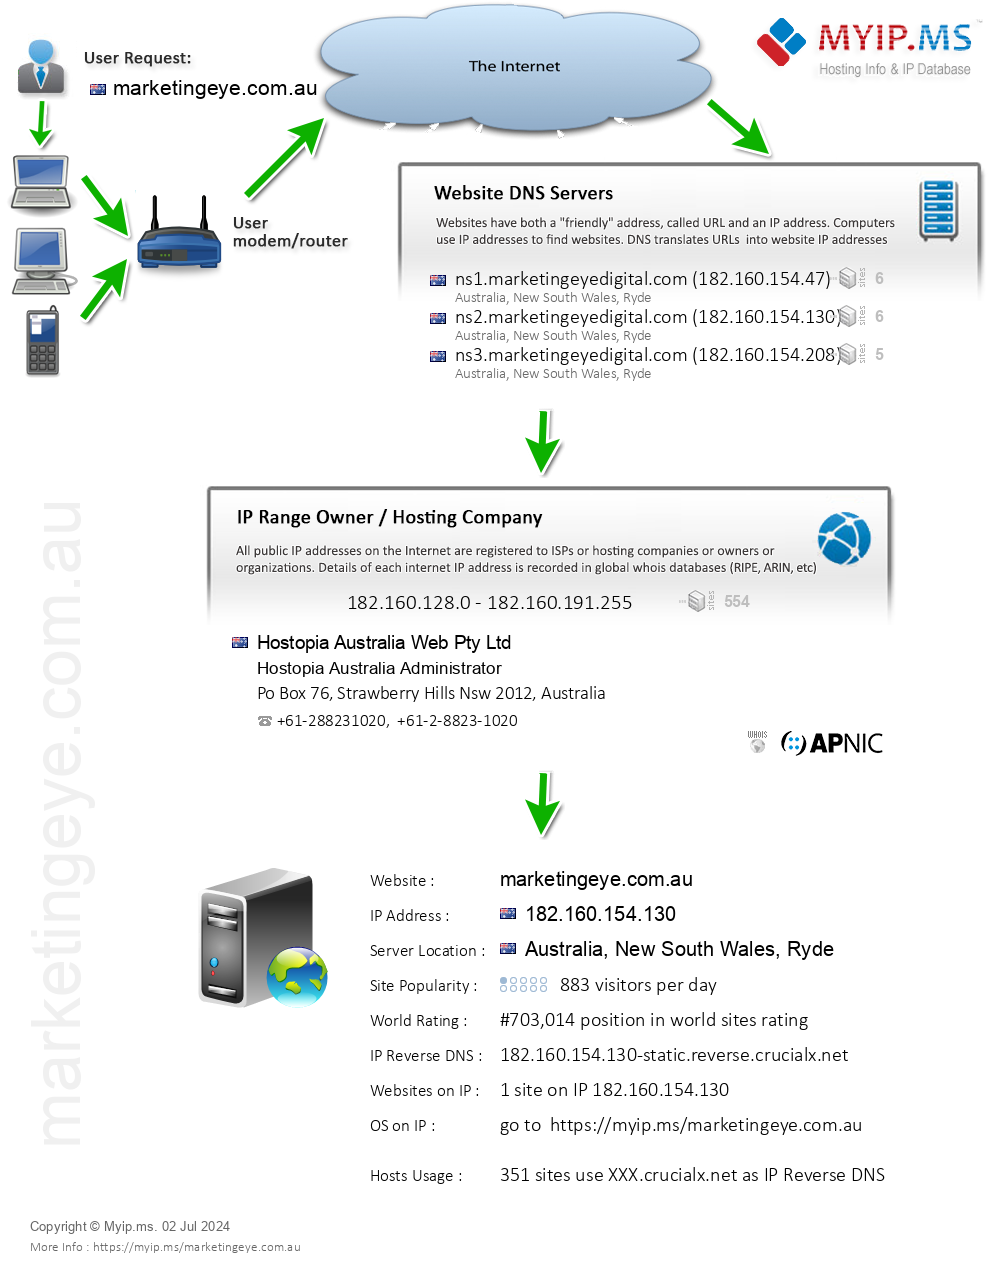 Marketingeye.com.au - Website Hosting Visual IP Diagram